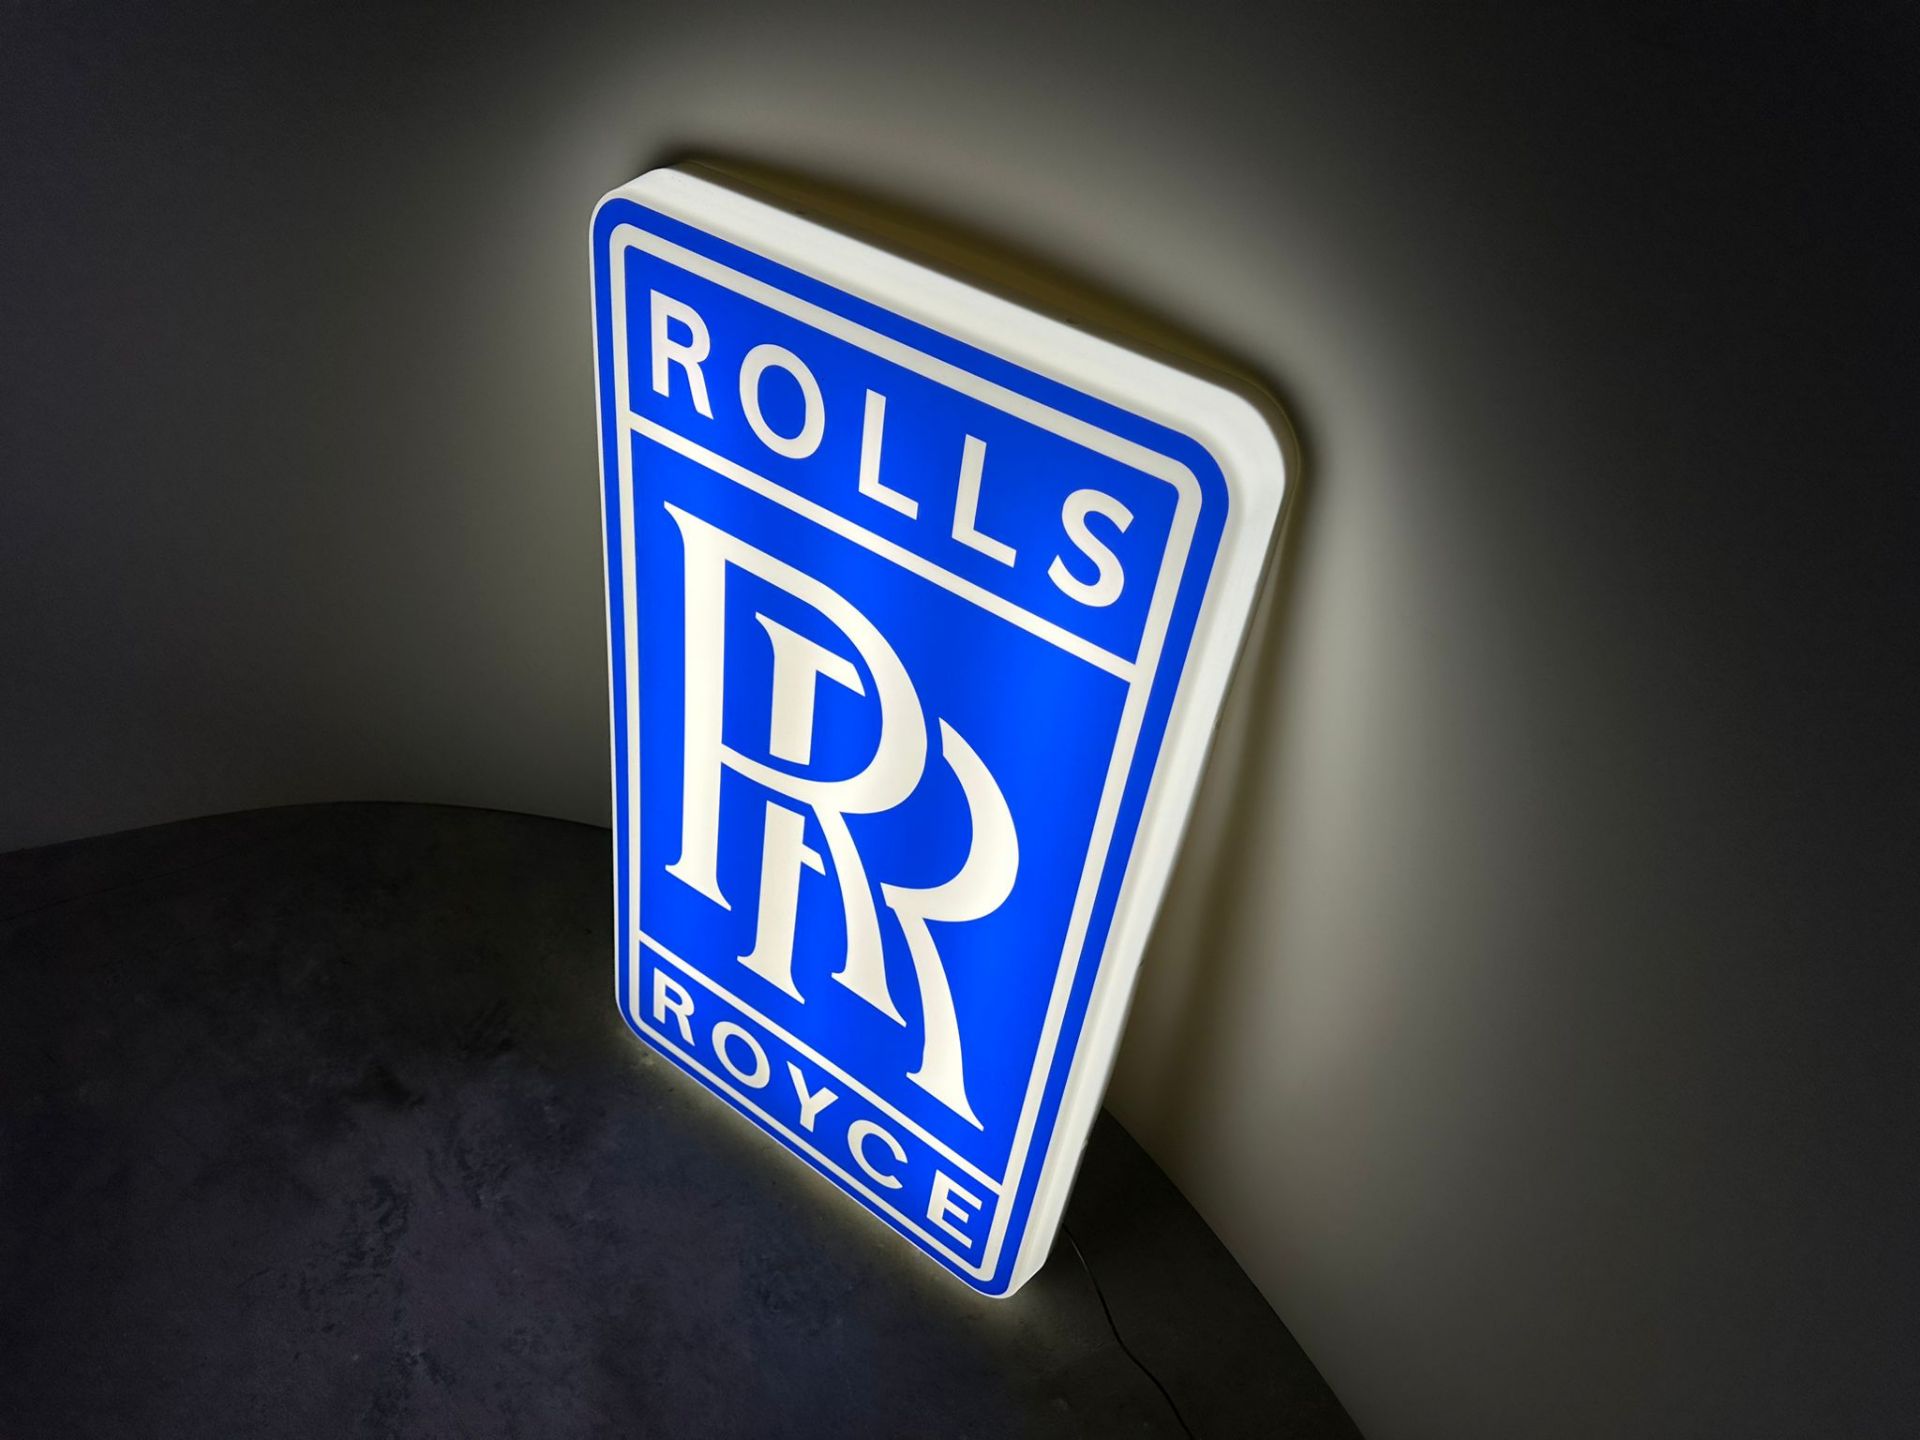 Rolls Royce illuminated sign - Image 6 of 9